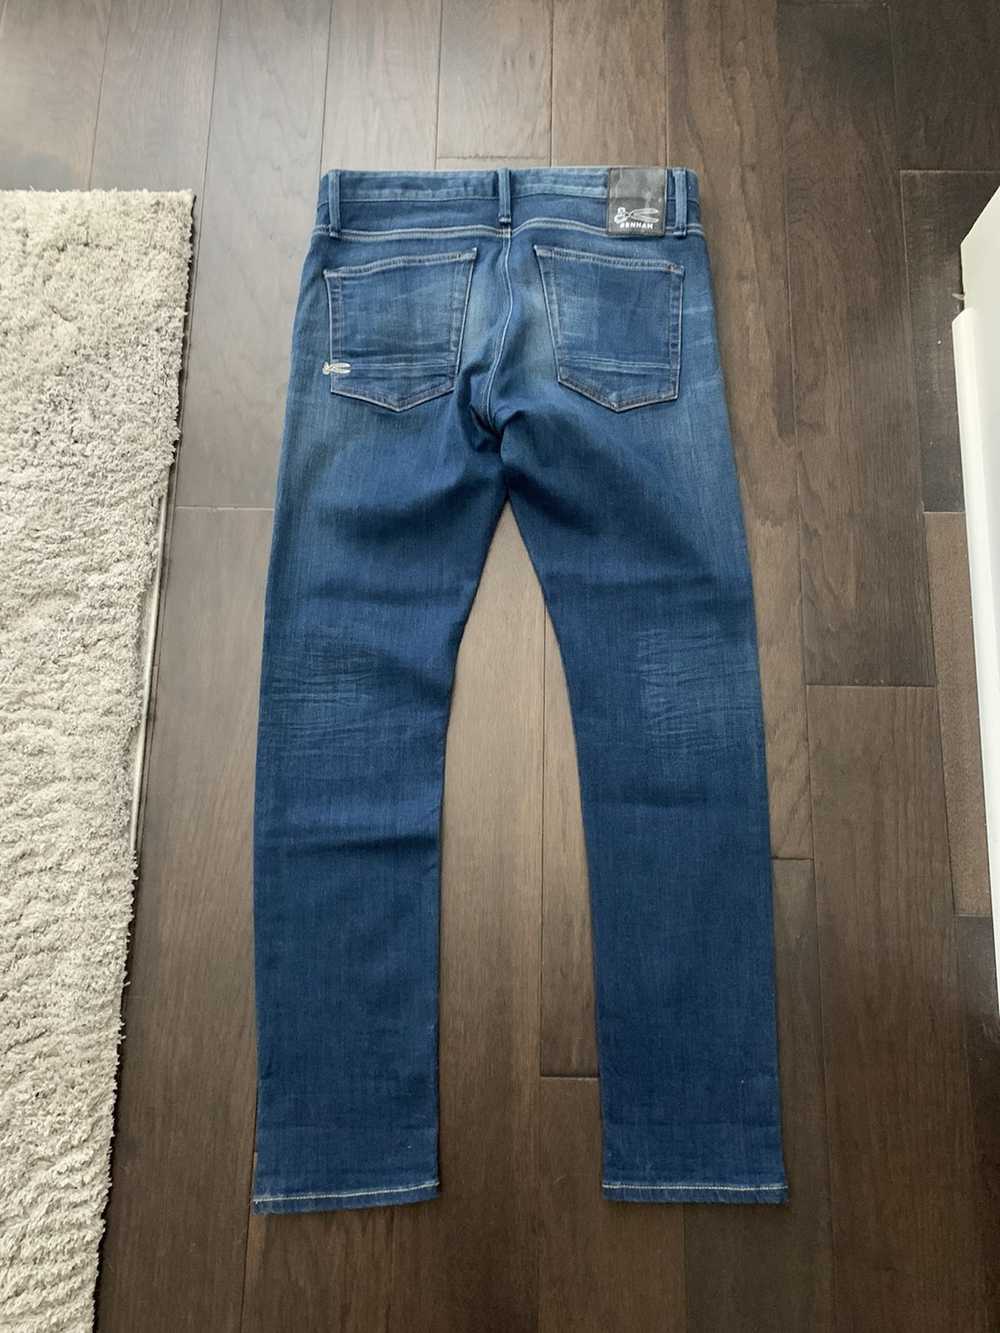 Denham Denham Razor Slim Fit Jeans - image 2